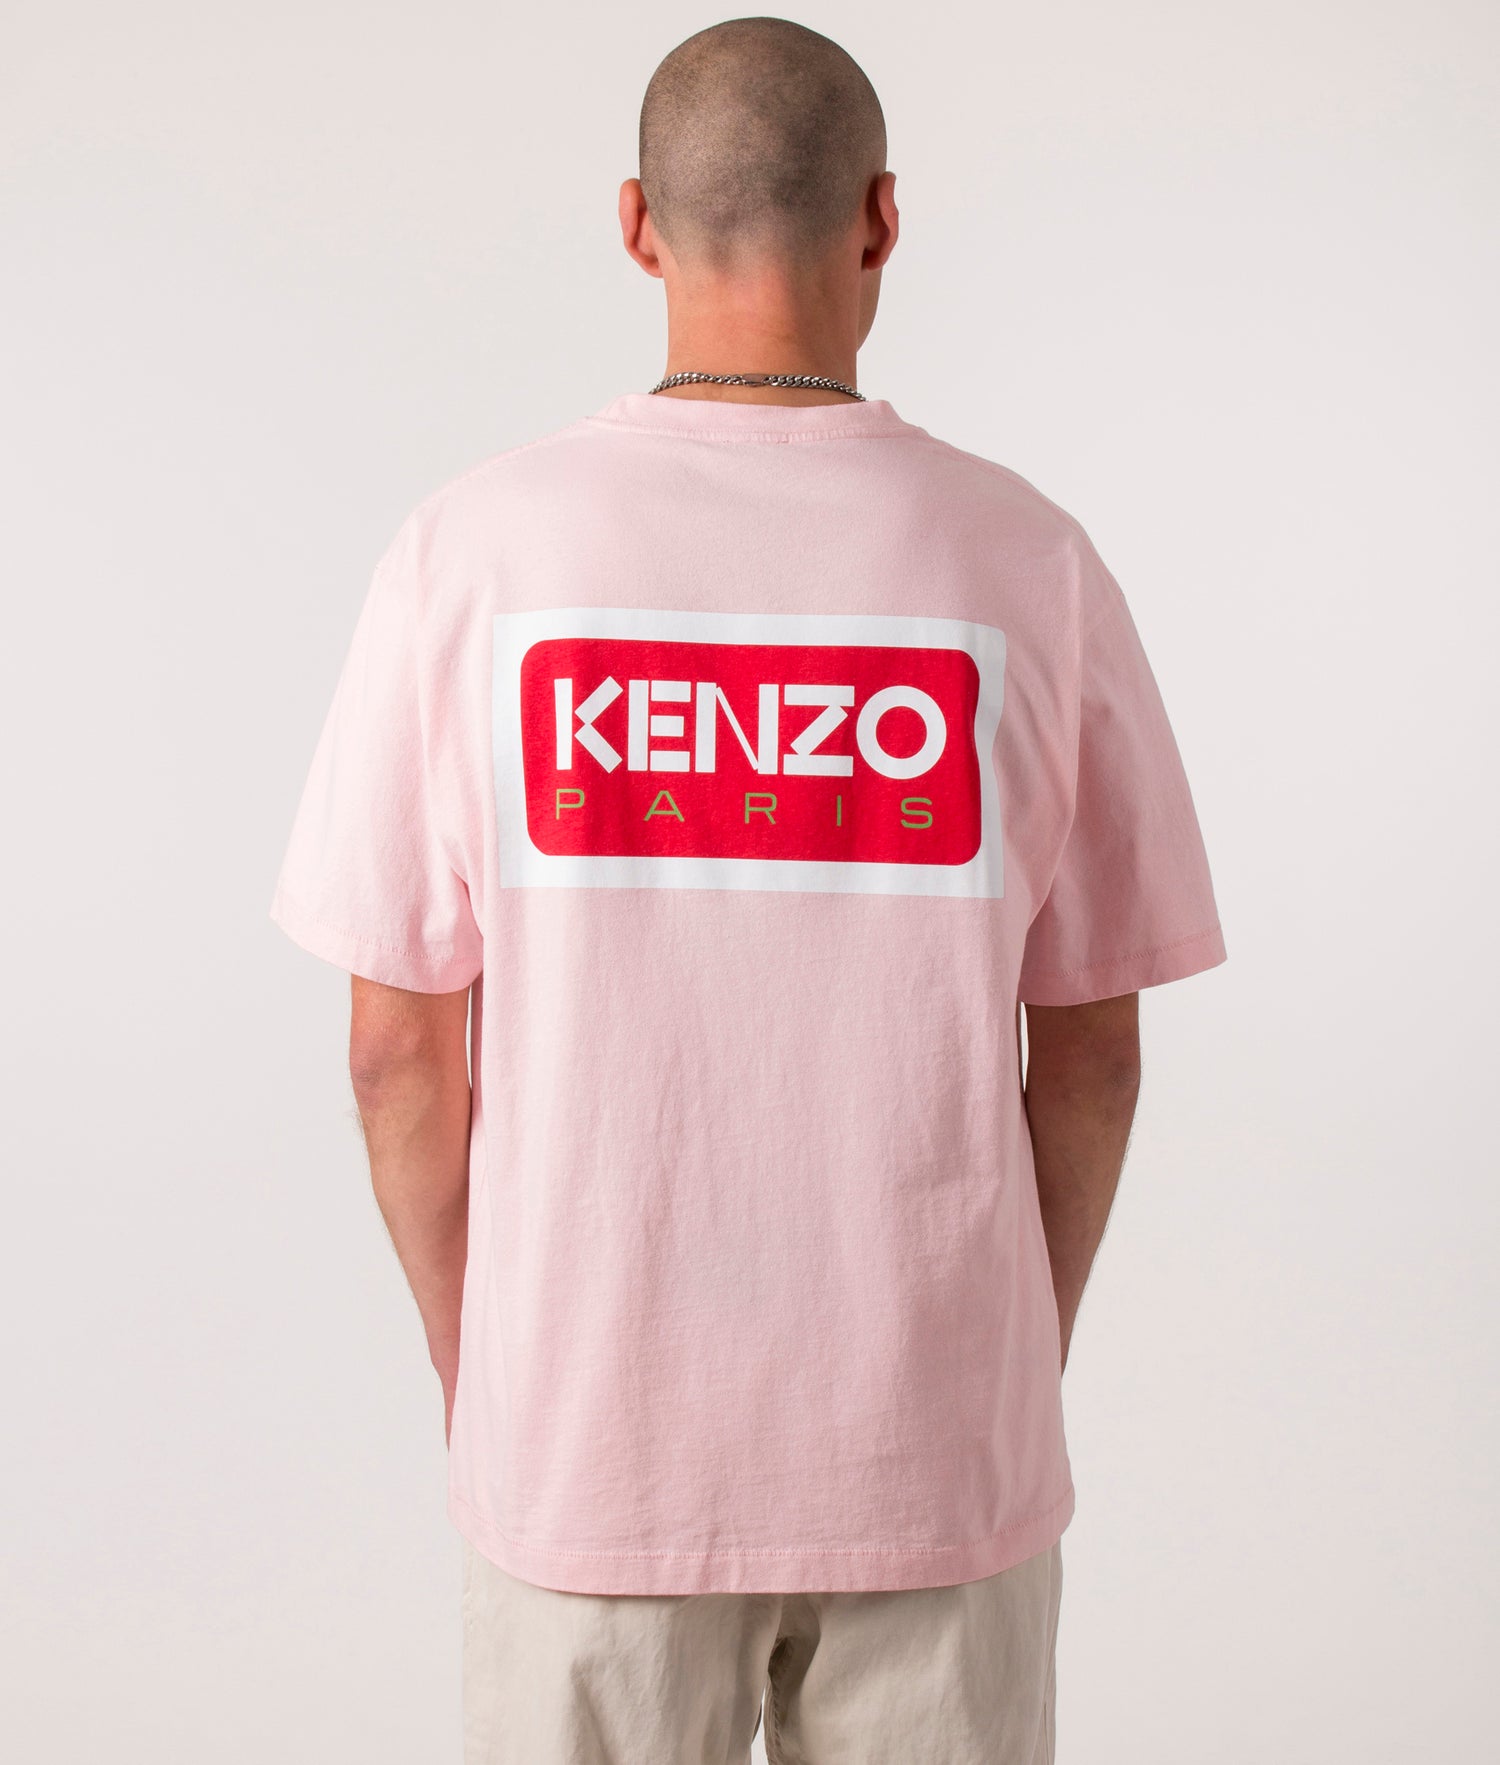 Oversized KENZO Paris T-Shirt Faded Pink | KENZO | EQVVS